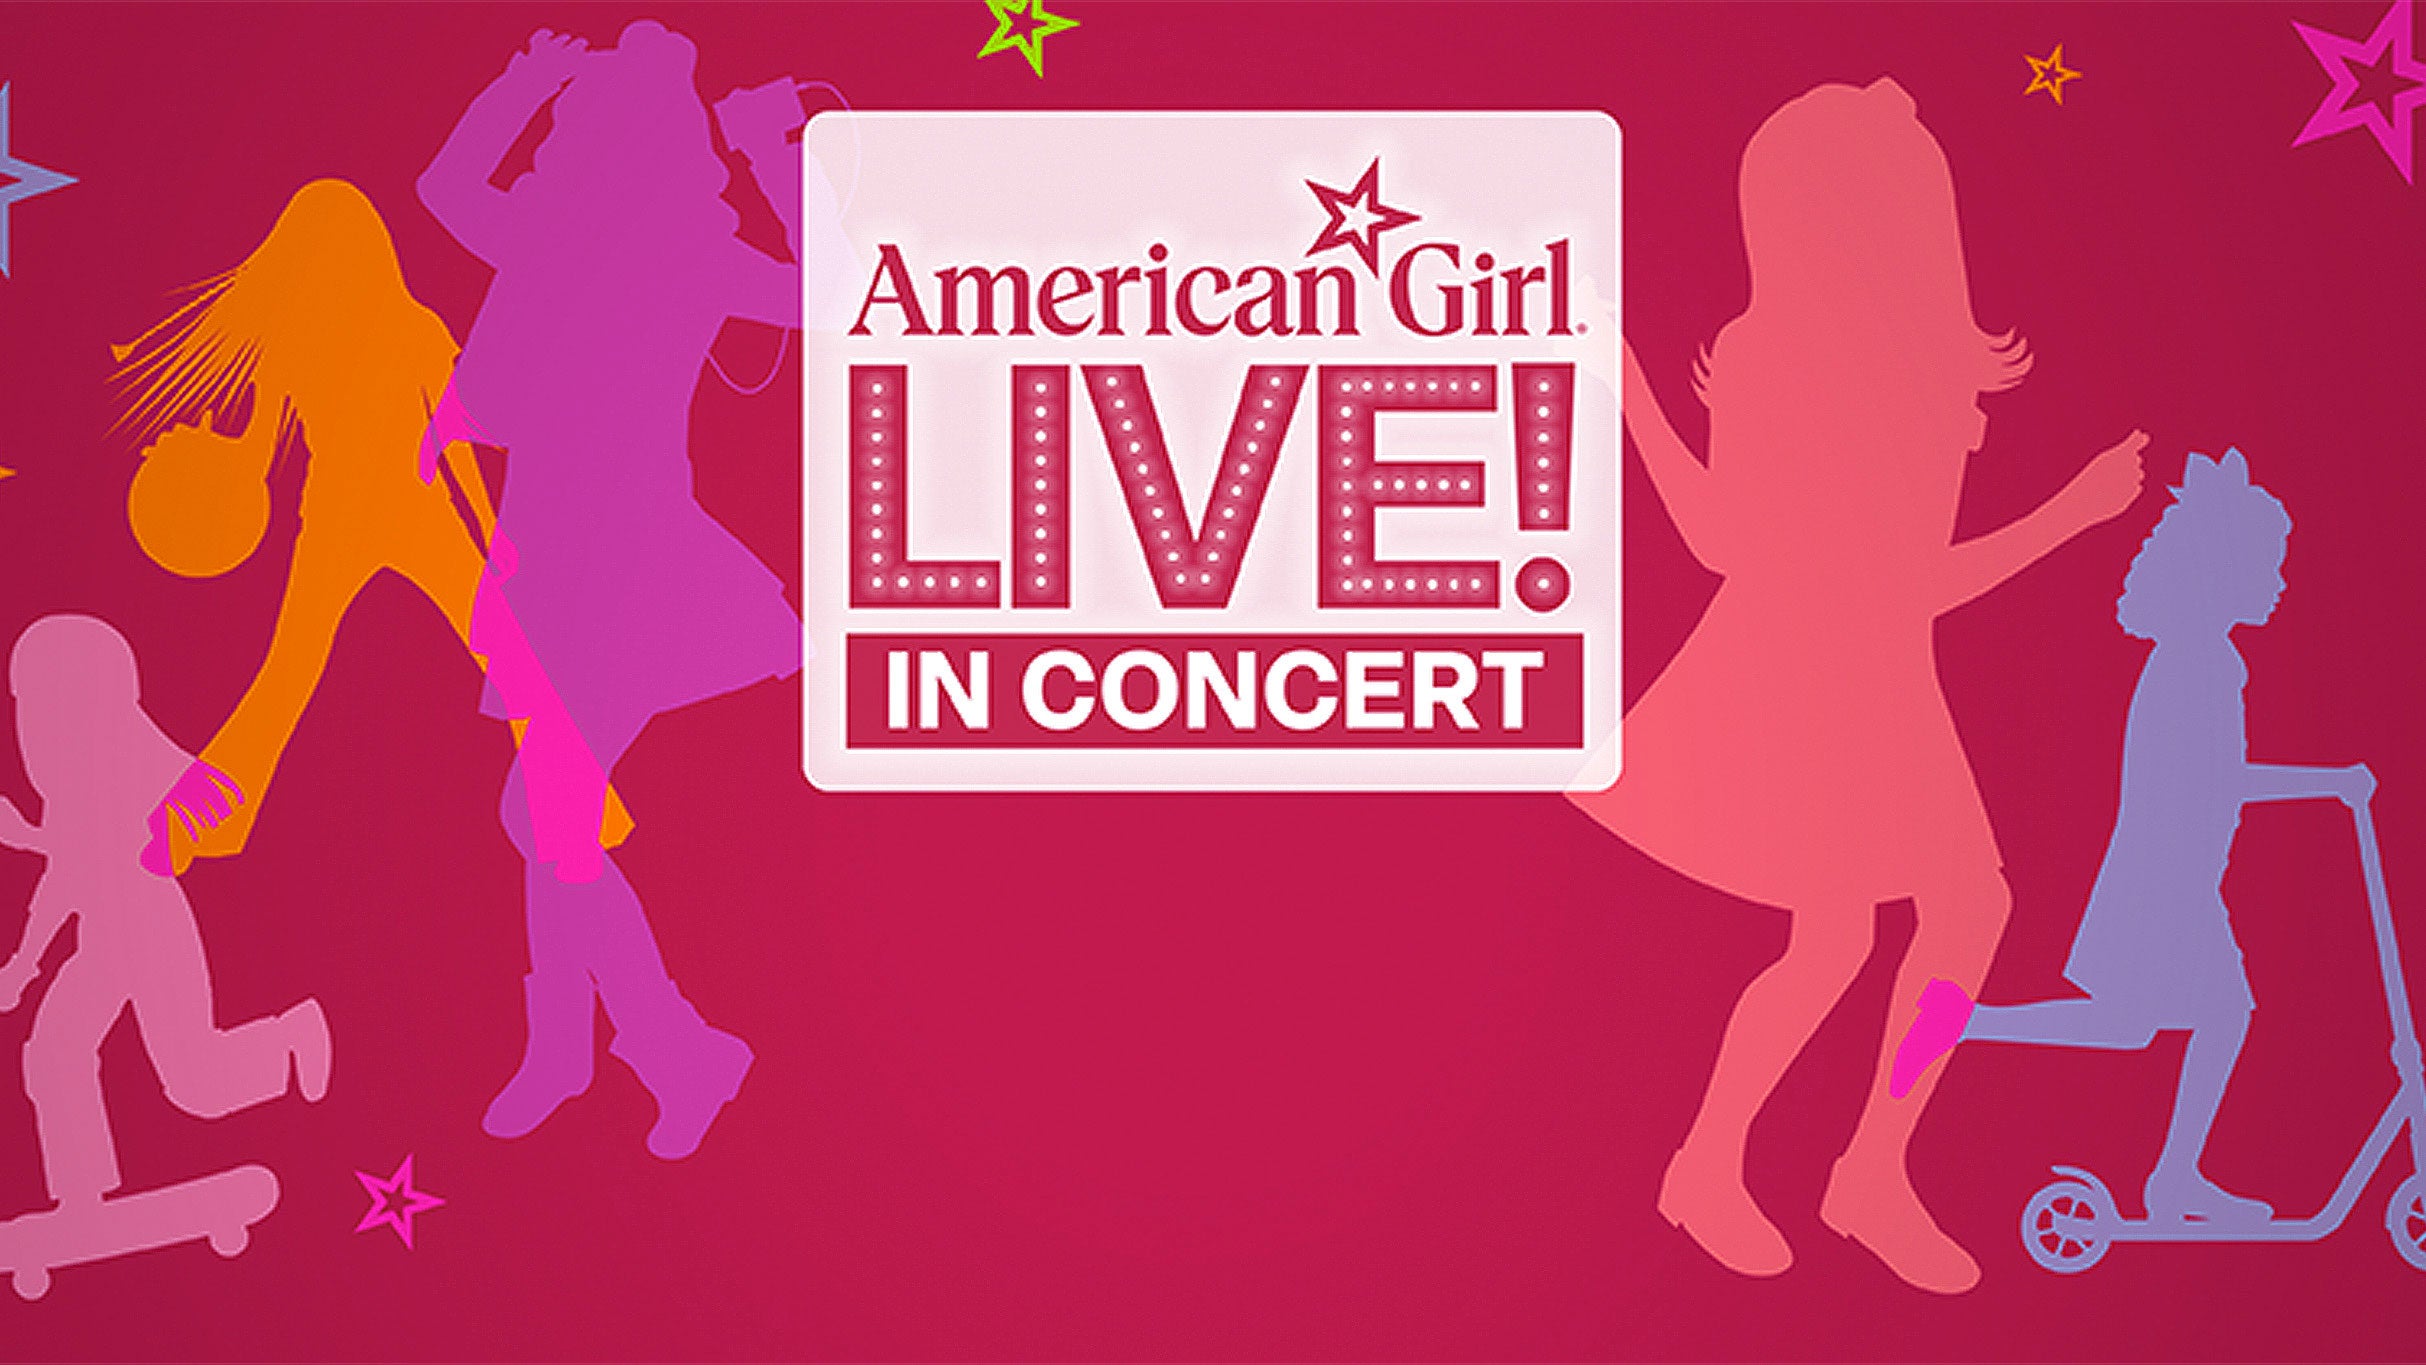 American Girl Live! In Concert free presale info for performance tickets in Atlanta, GA (Atlanta Symphony Hall)